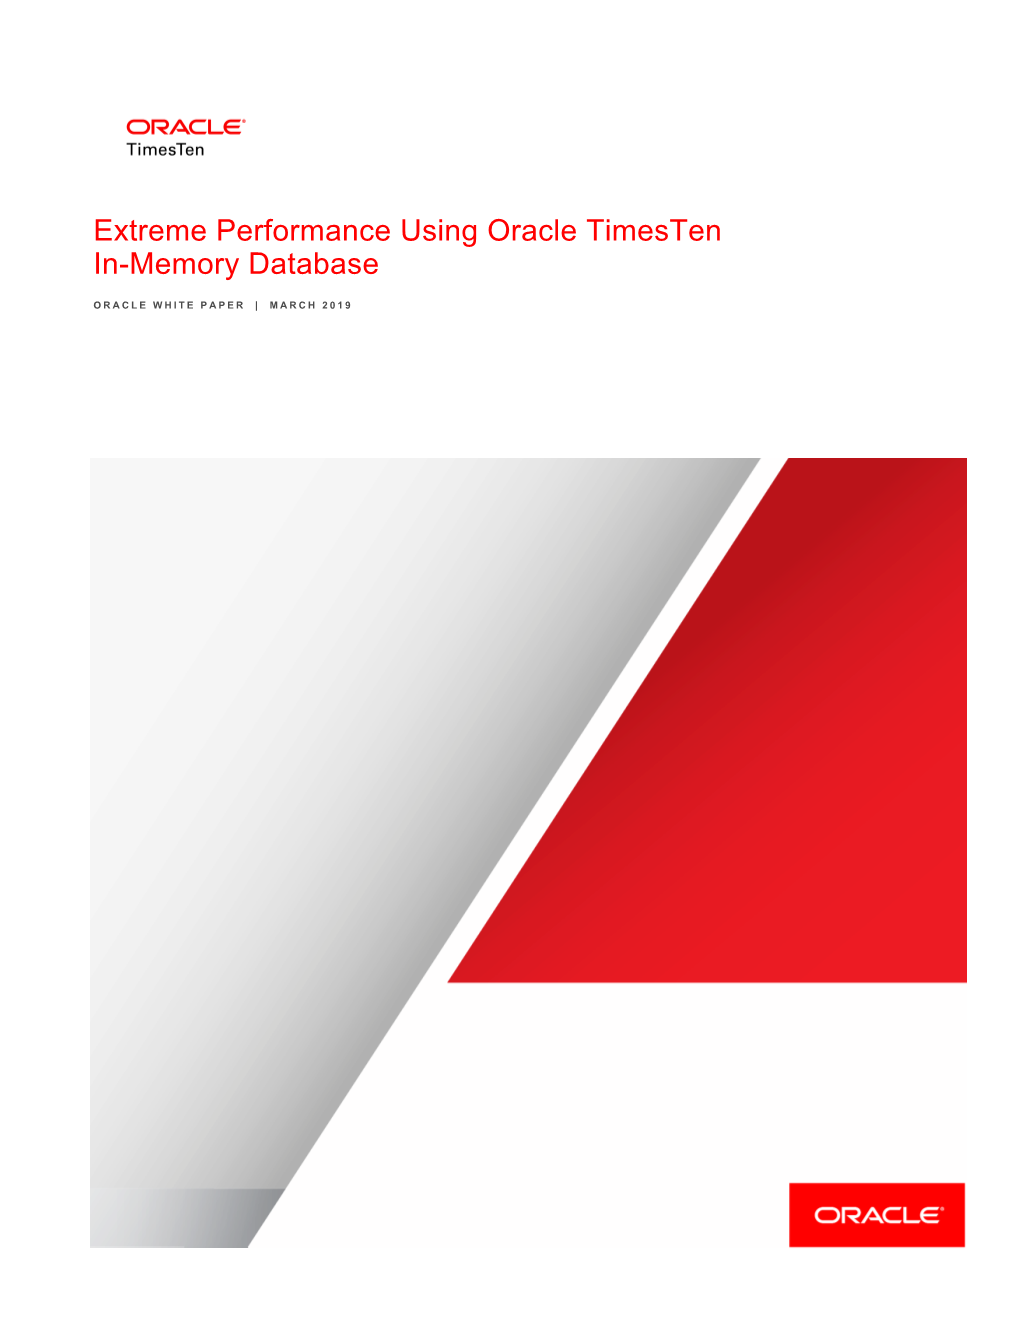 Extreme Performance Using Timesten (PDF)